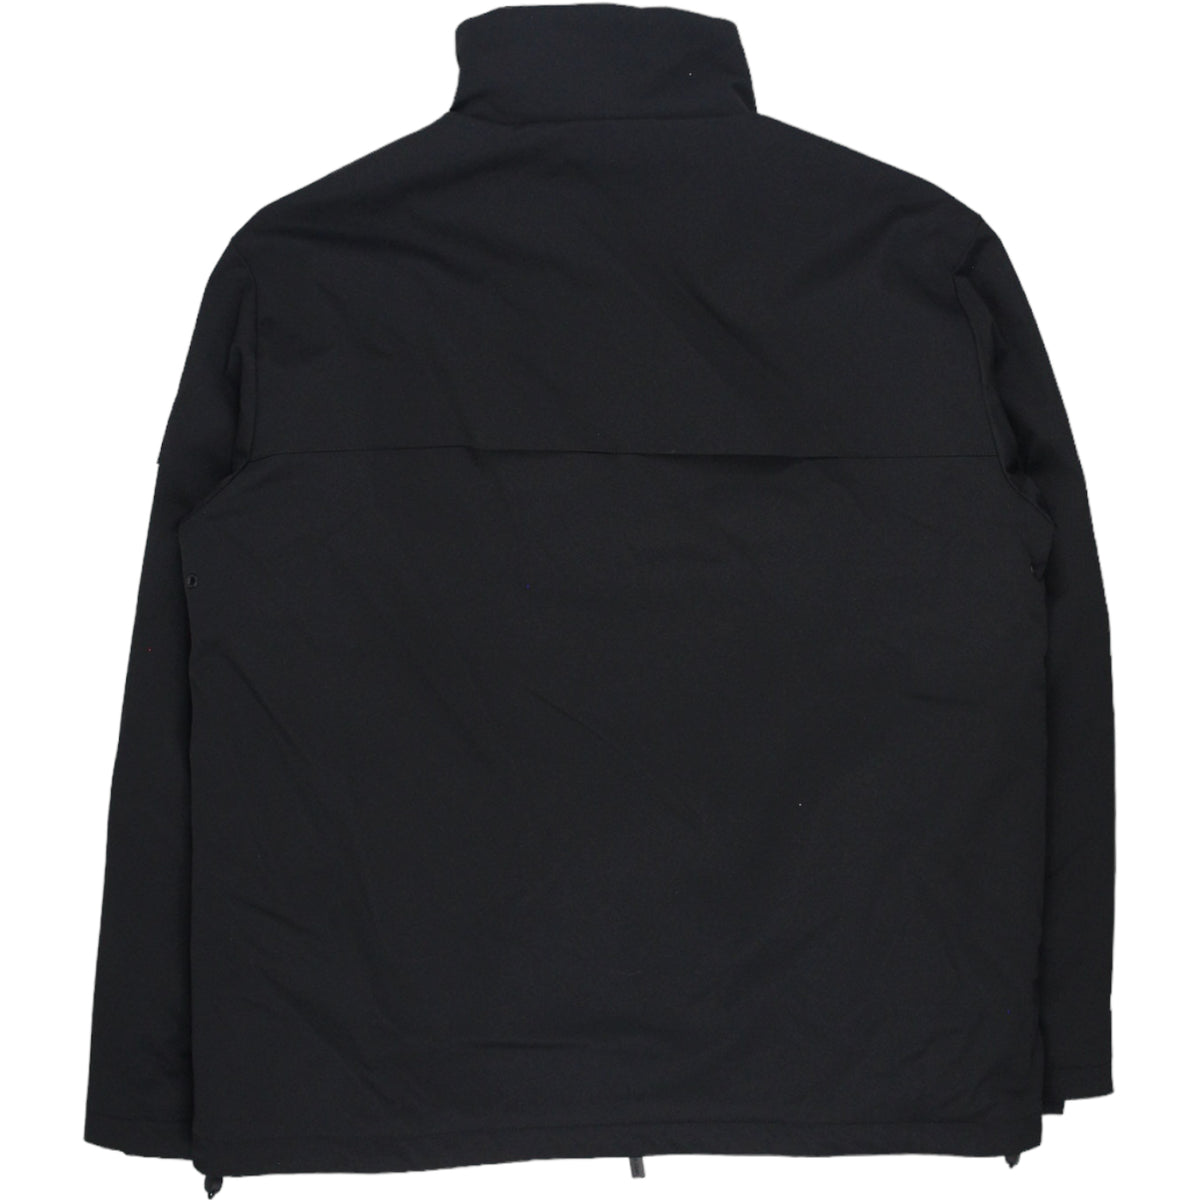 Calvin Klein Black Padded Field Jacket